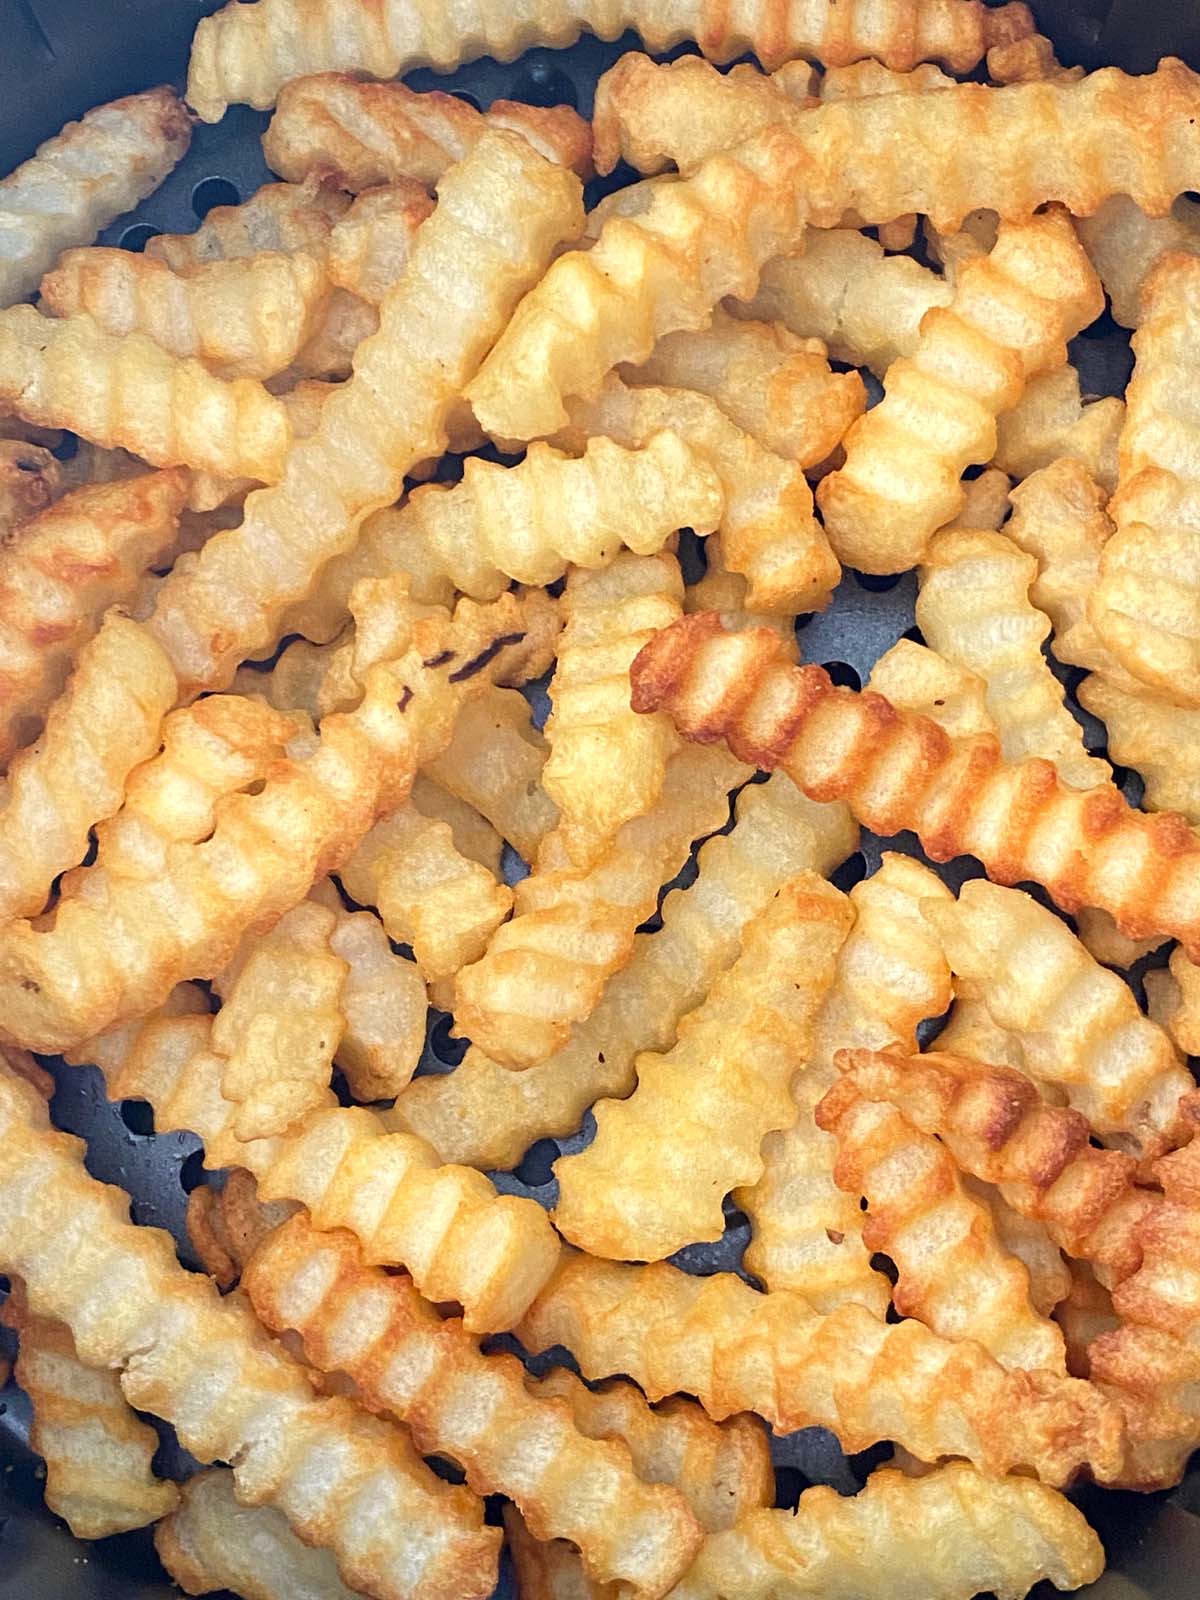 Air fryer Crinkle Cut Fries - Rachna cooks